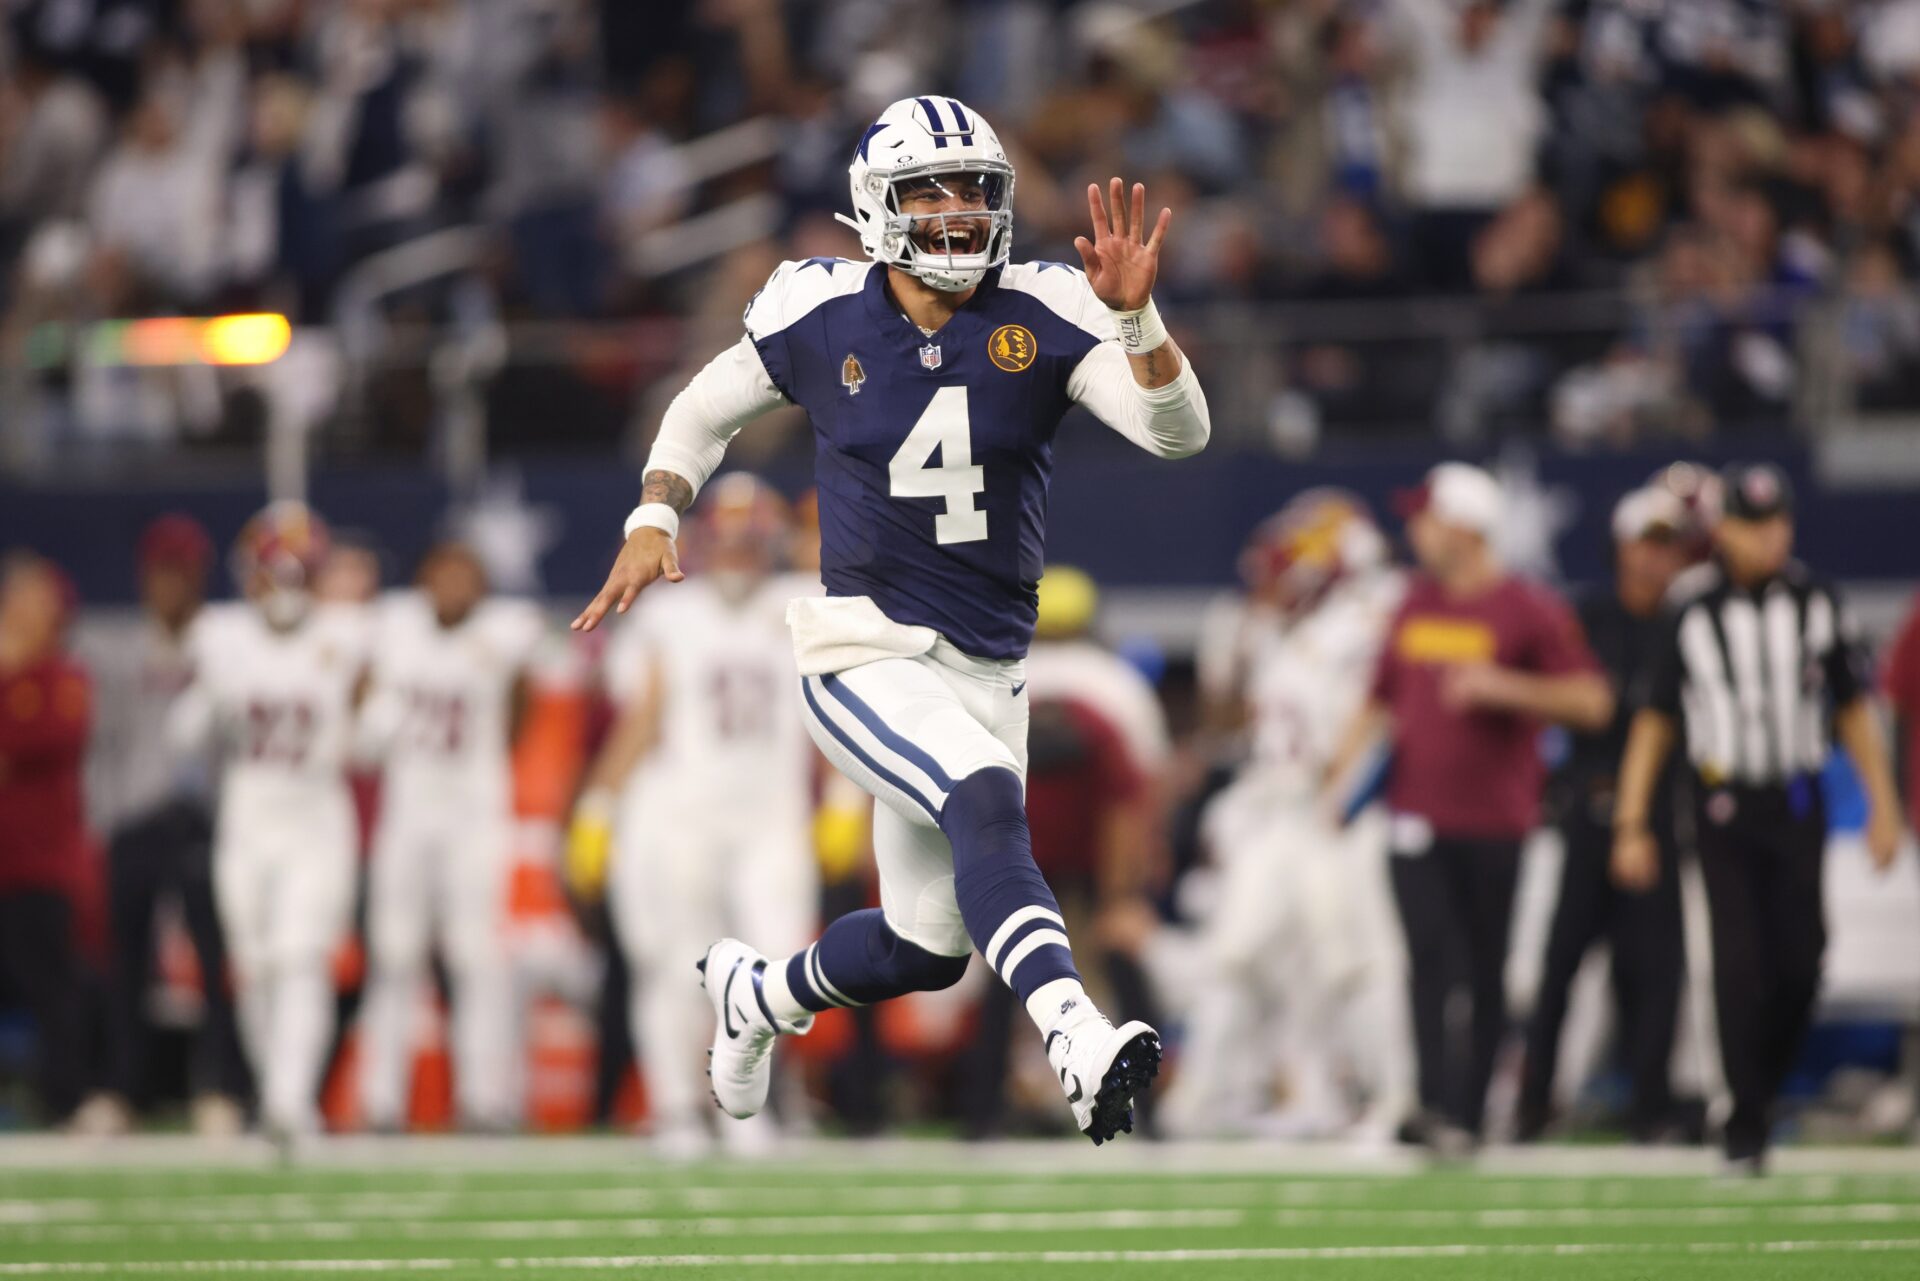 Dallas Cowboys quarterback Dak Prescott (4) celebrates throwing a touchdown in the fourth quarter against the Washington Commanders.